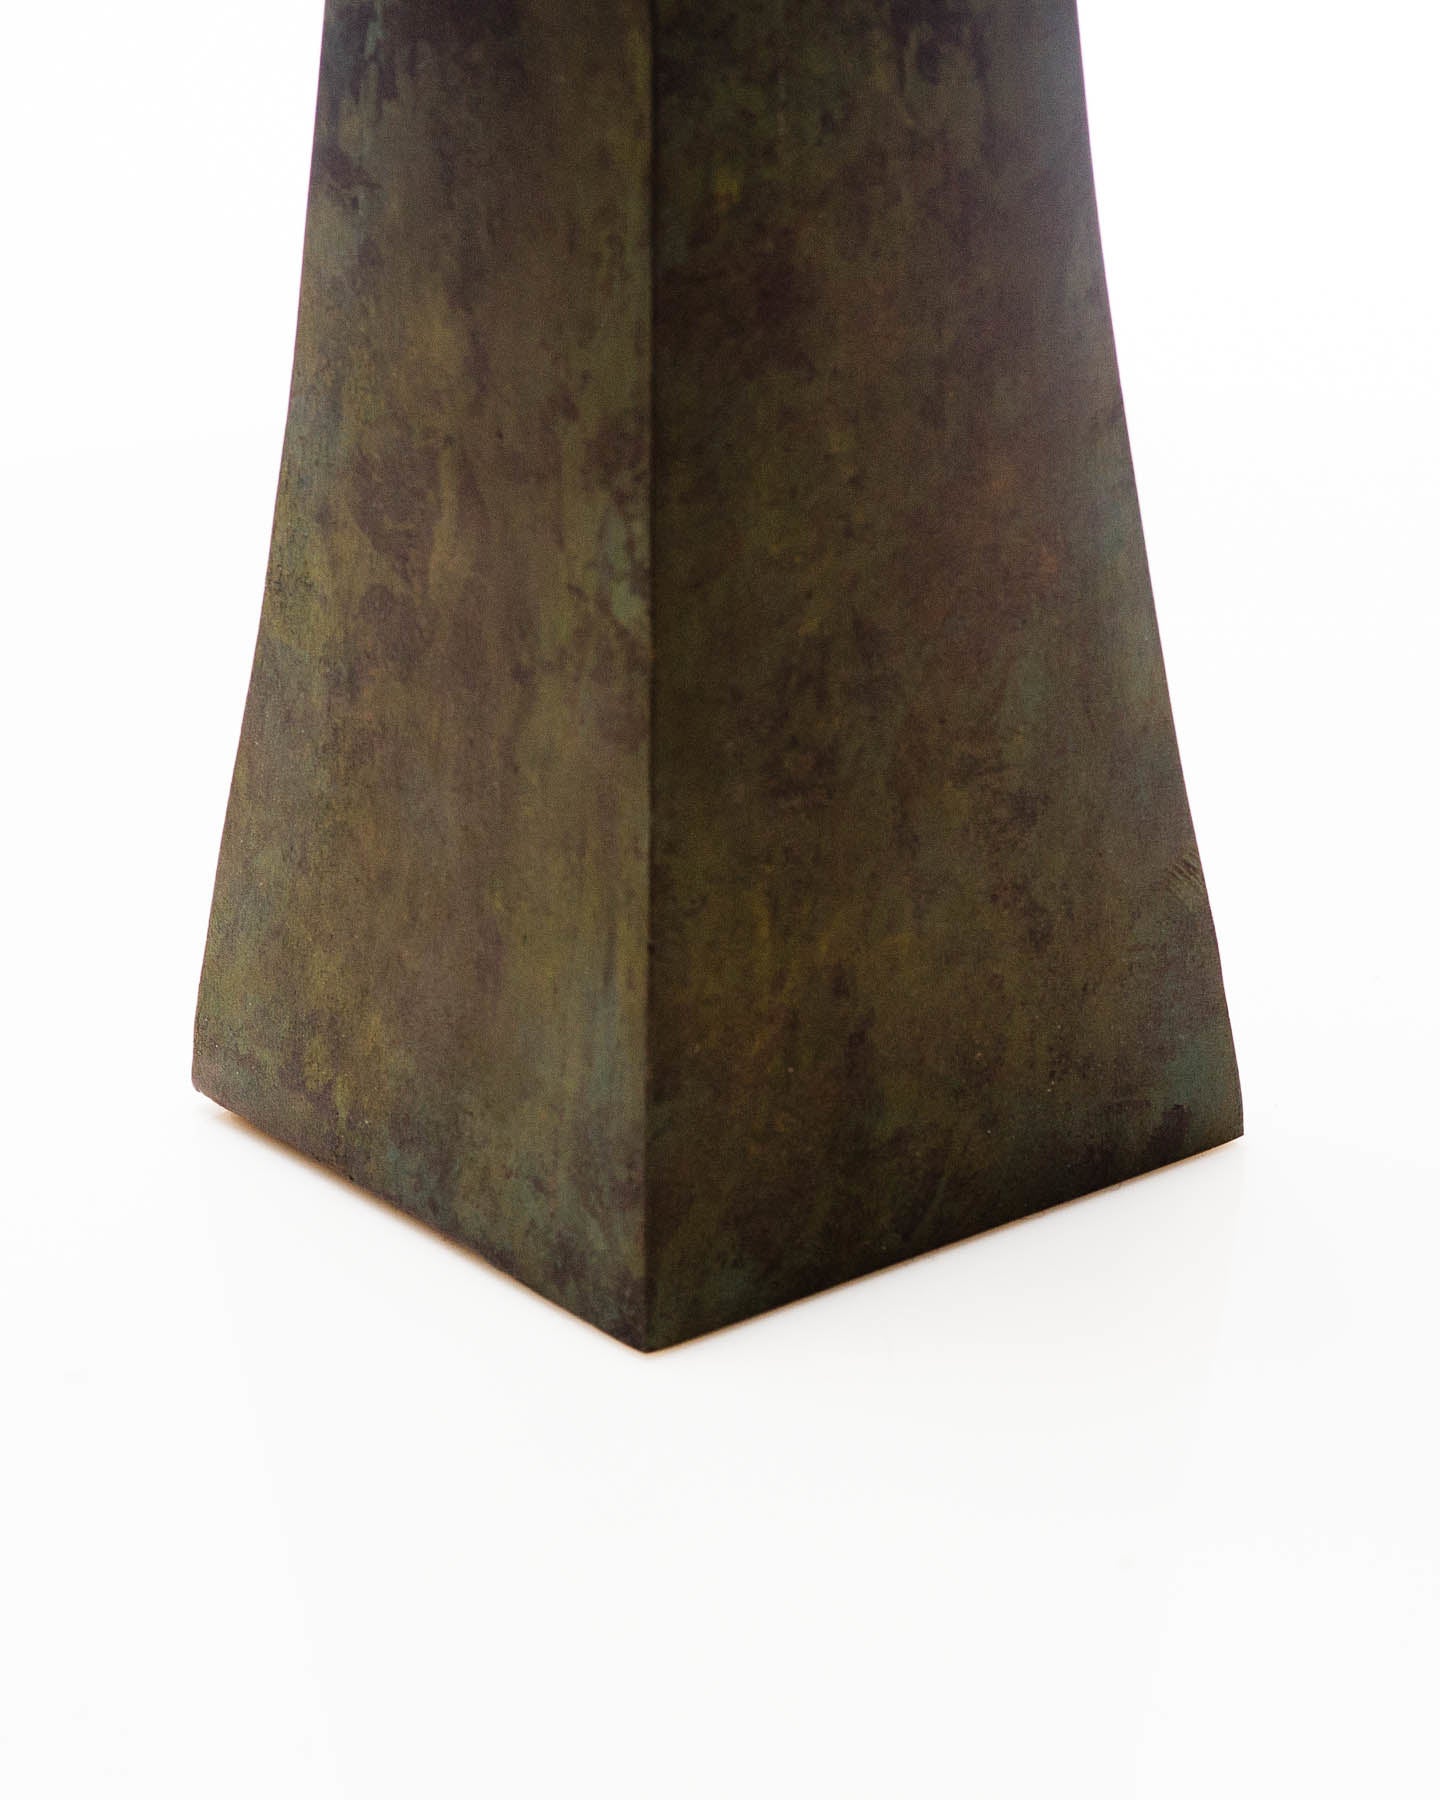 Somand Torchiere Verdigris Bronze Table Lamp